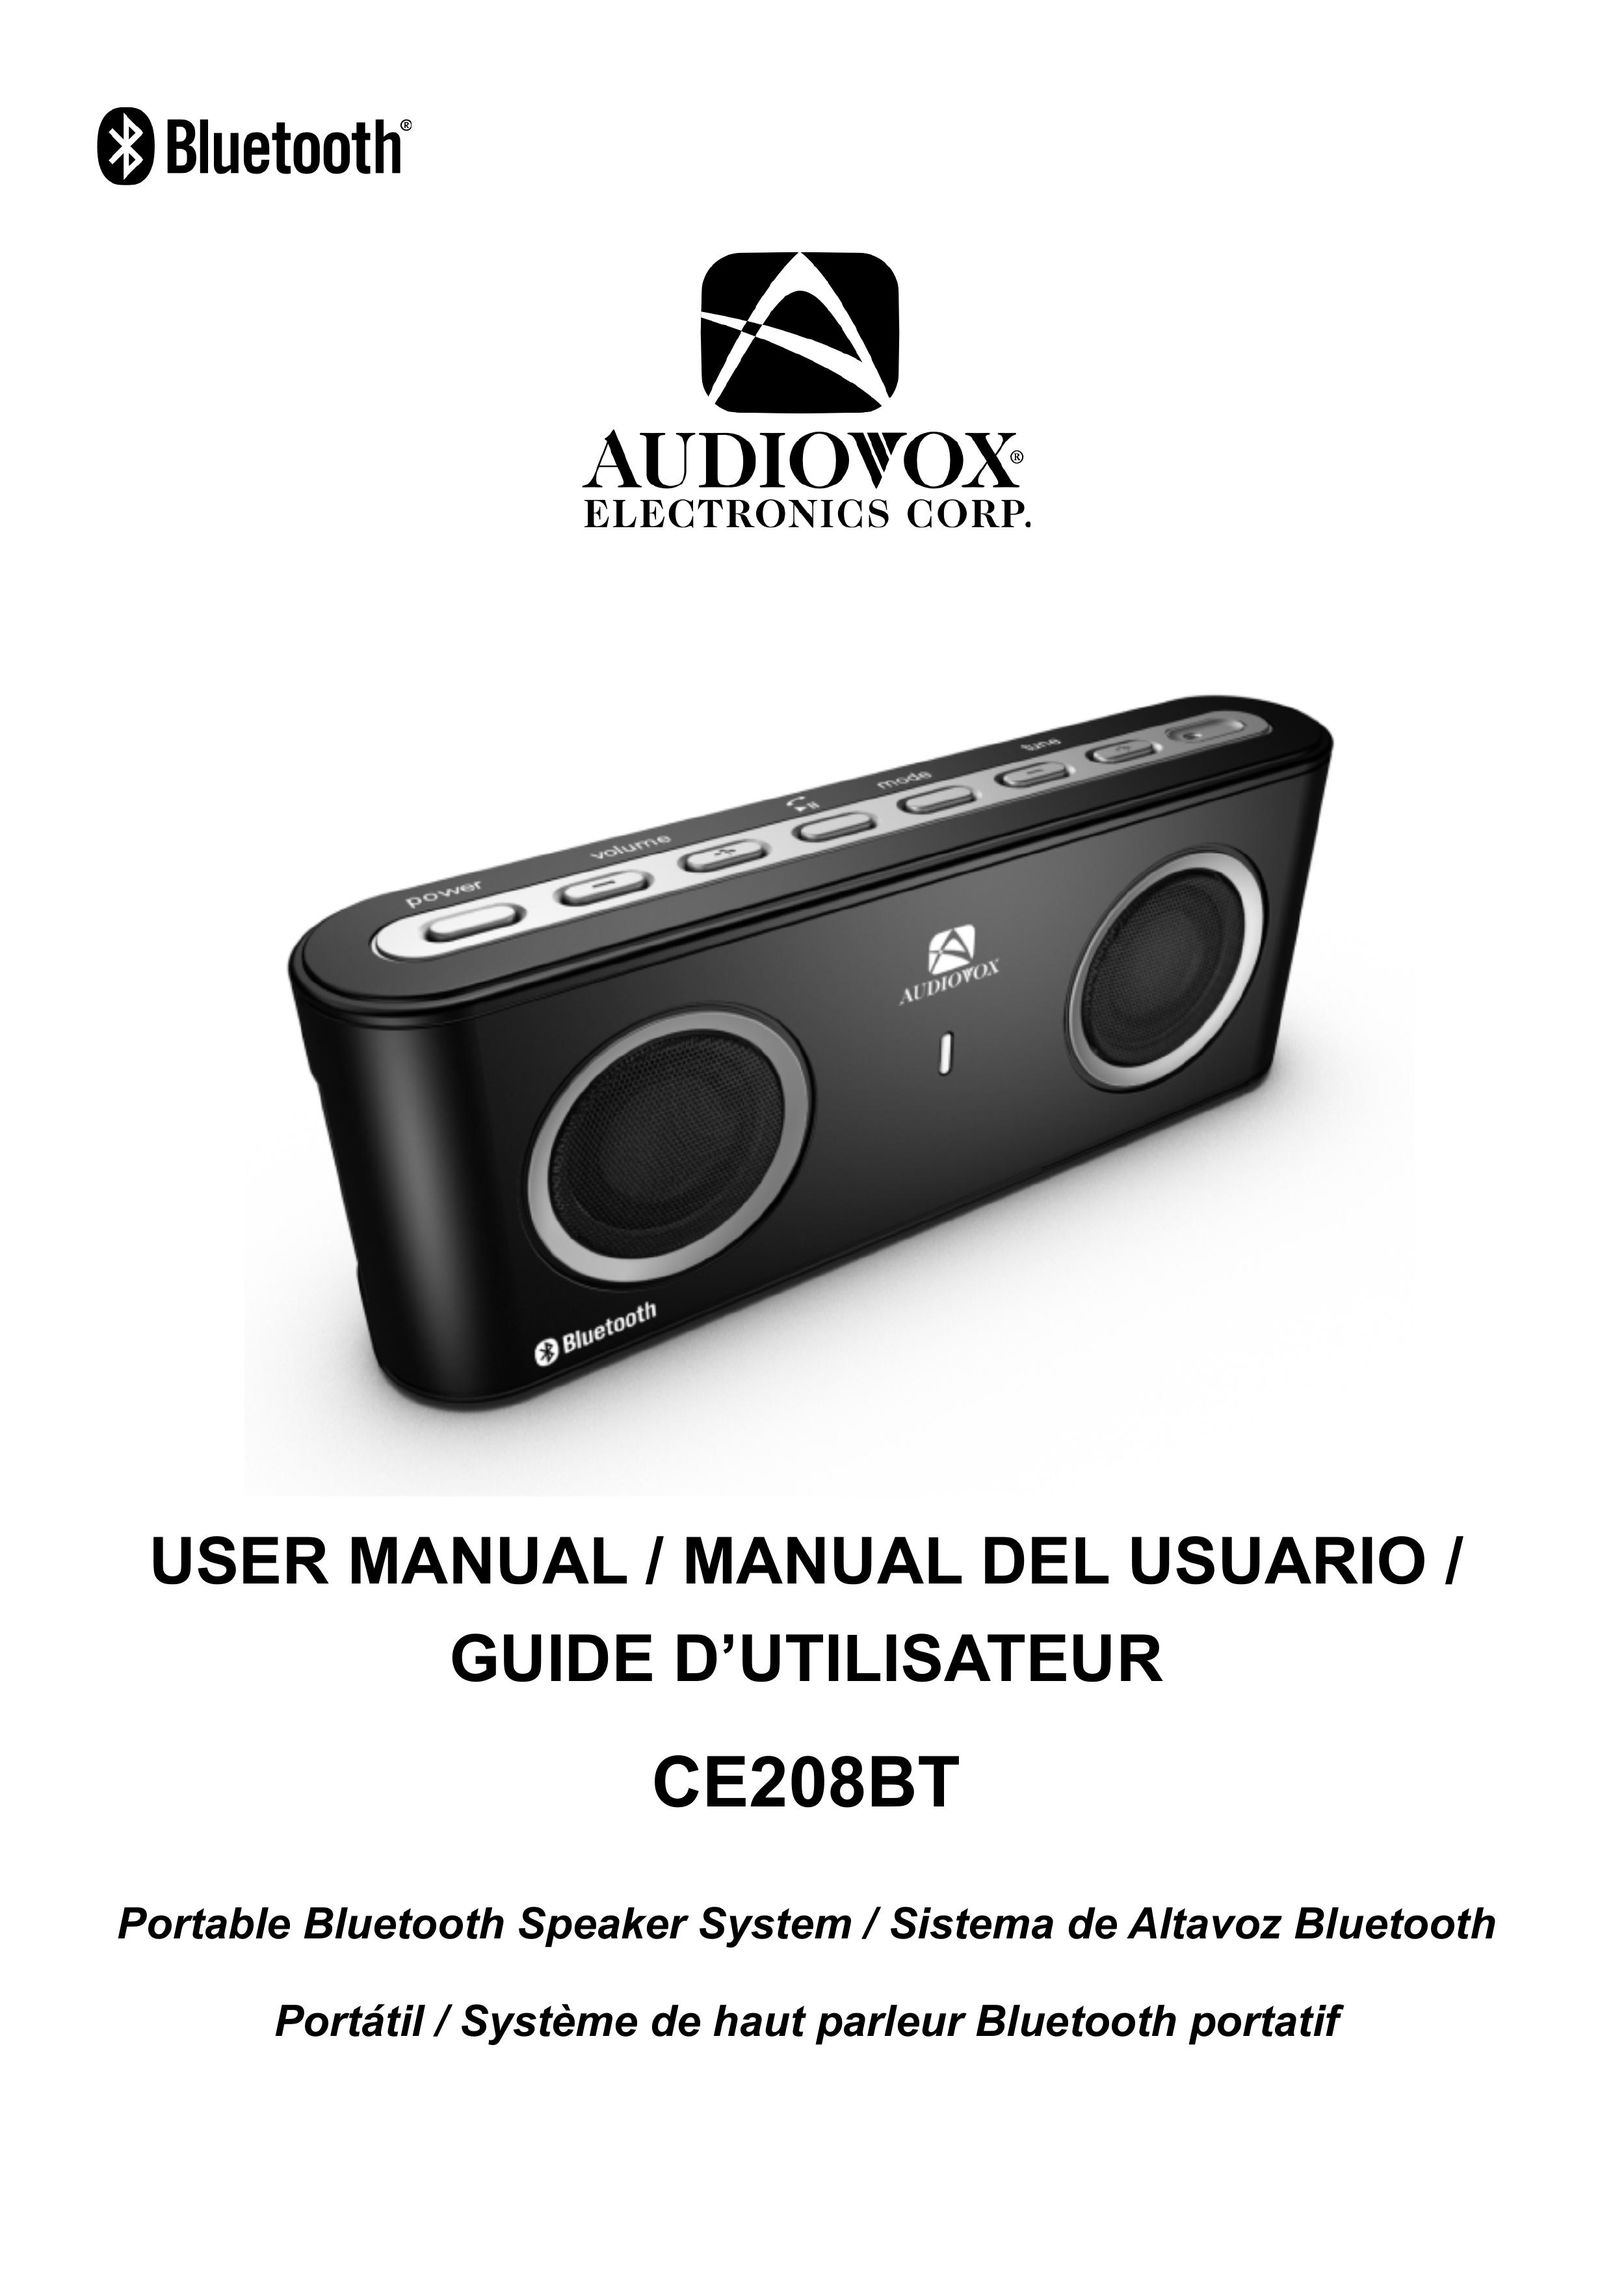 Audiovox CE208BT Speaker User Manual